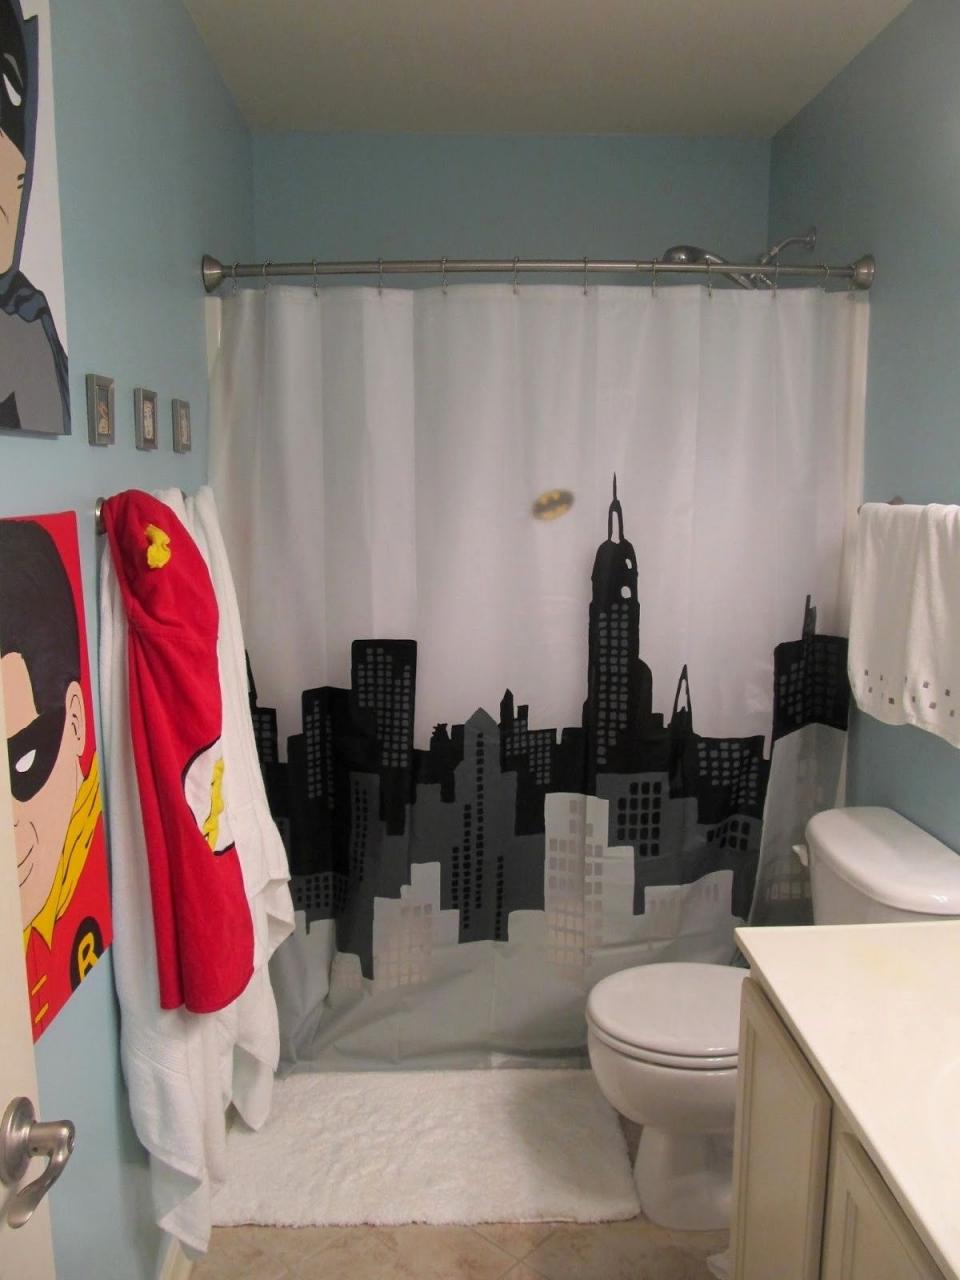 Superhero bathroom Bathroom kids, Superhero bathroom, Kid bathroom decor